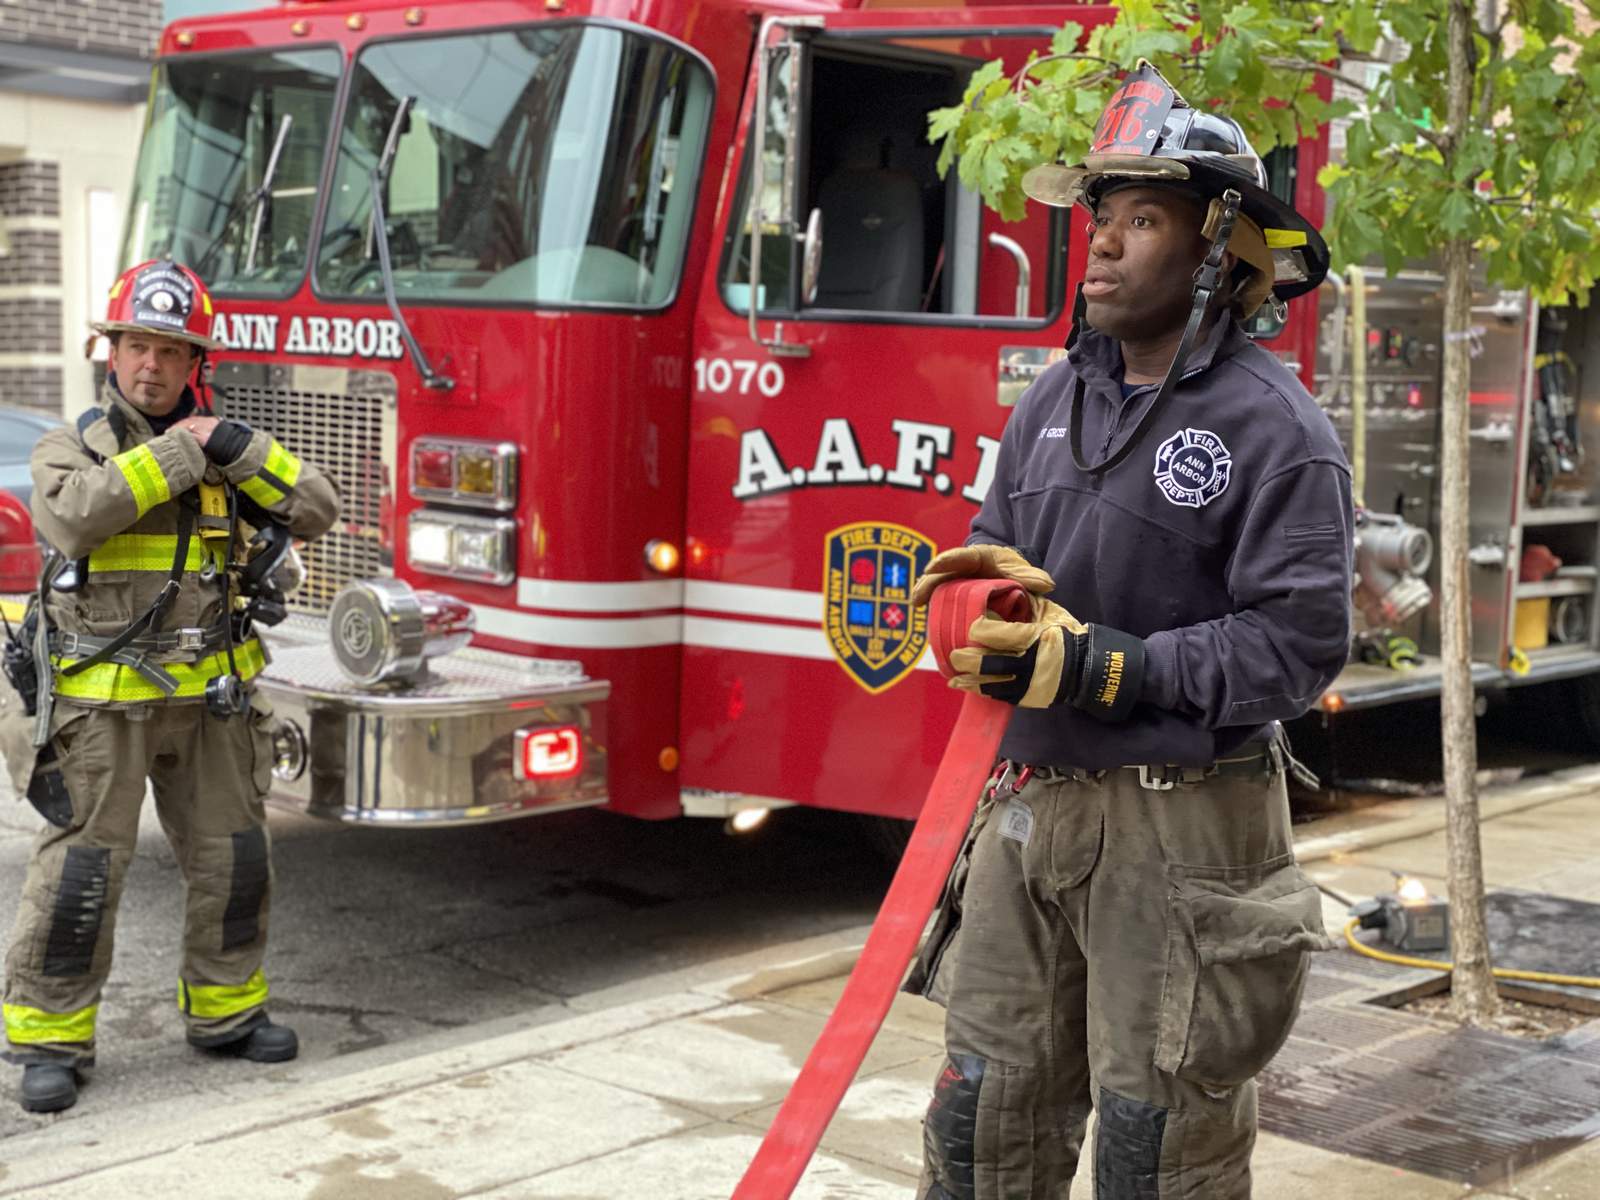 Ann Arbor Fire Department hiring for fire recruit position